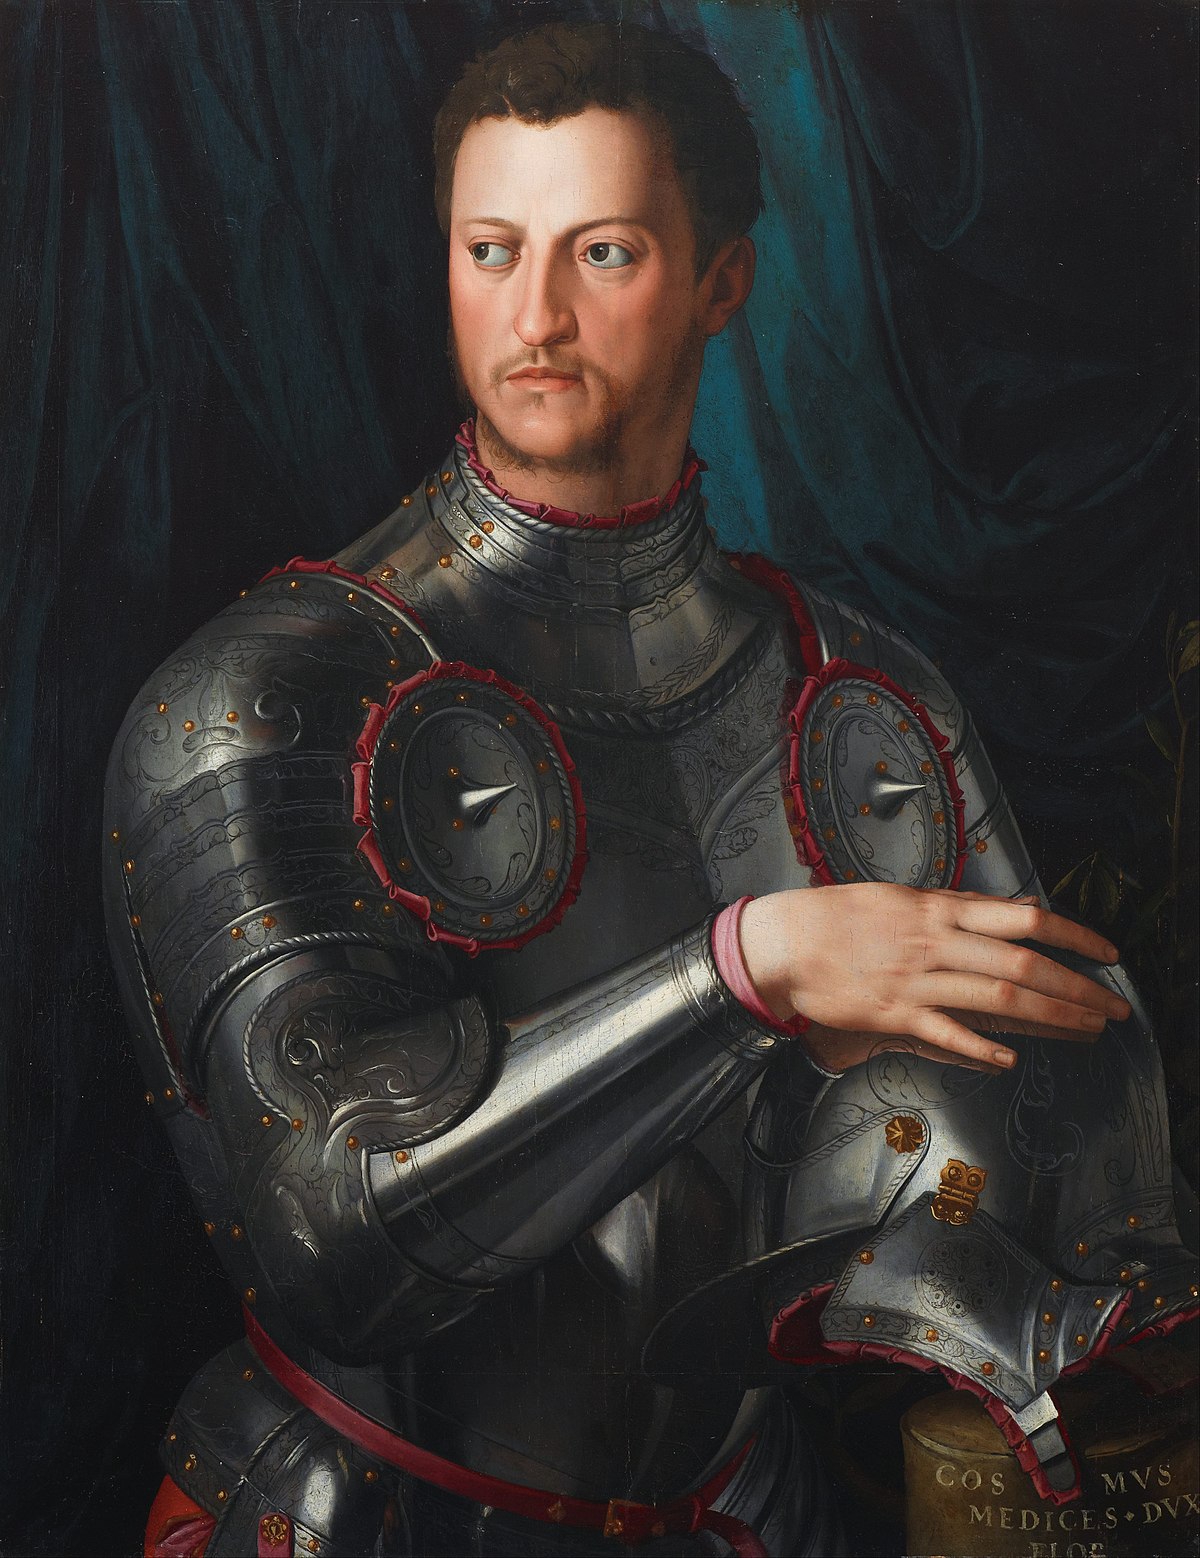  Cosimo de Medici, biografi og historie